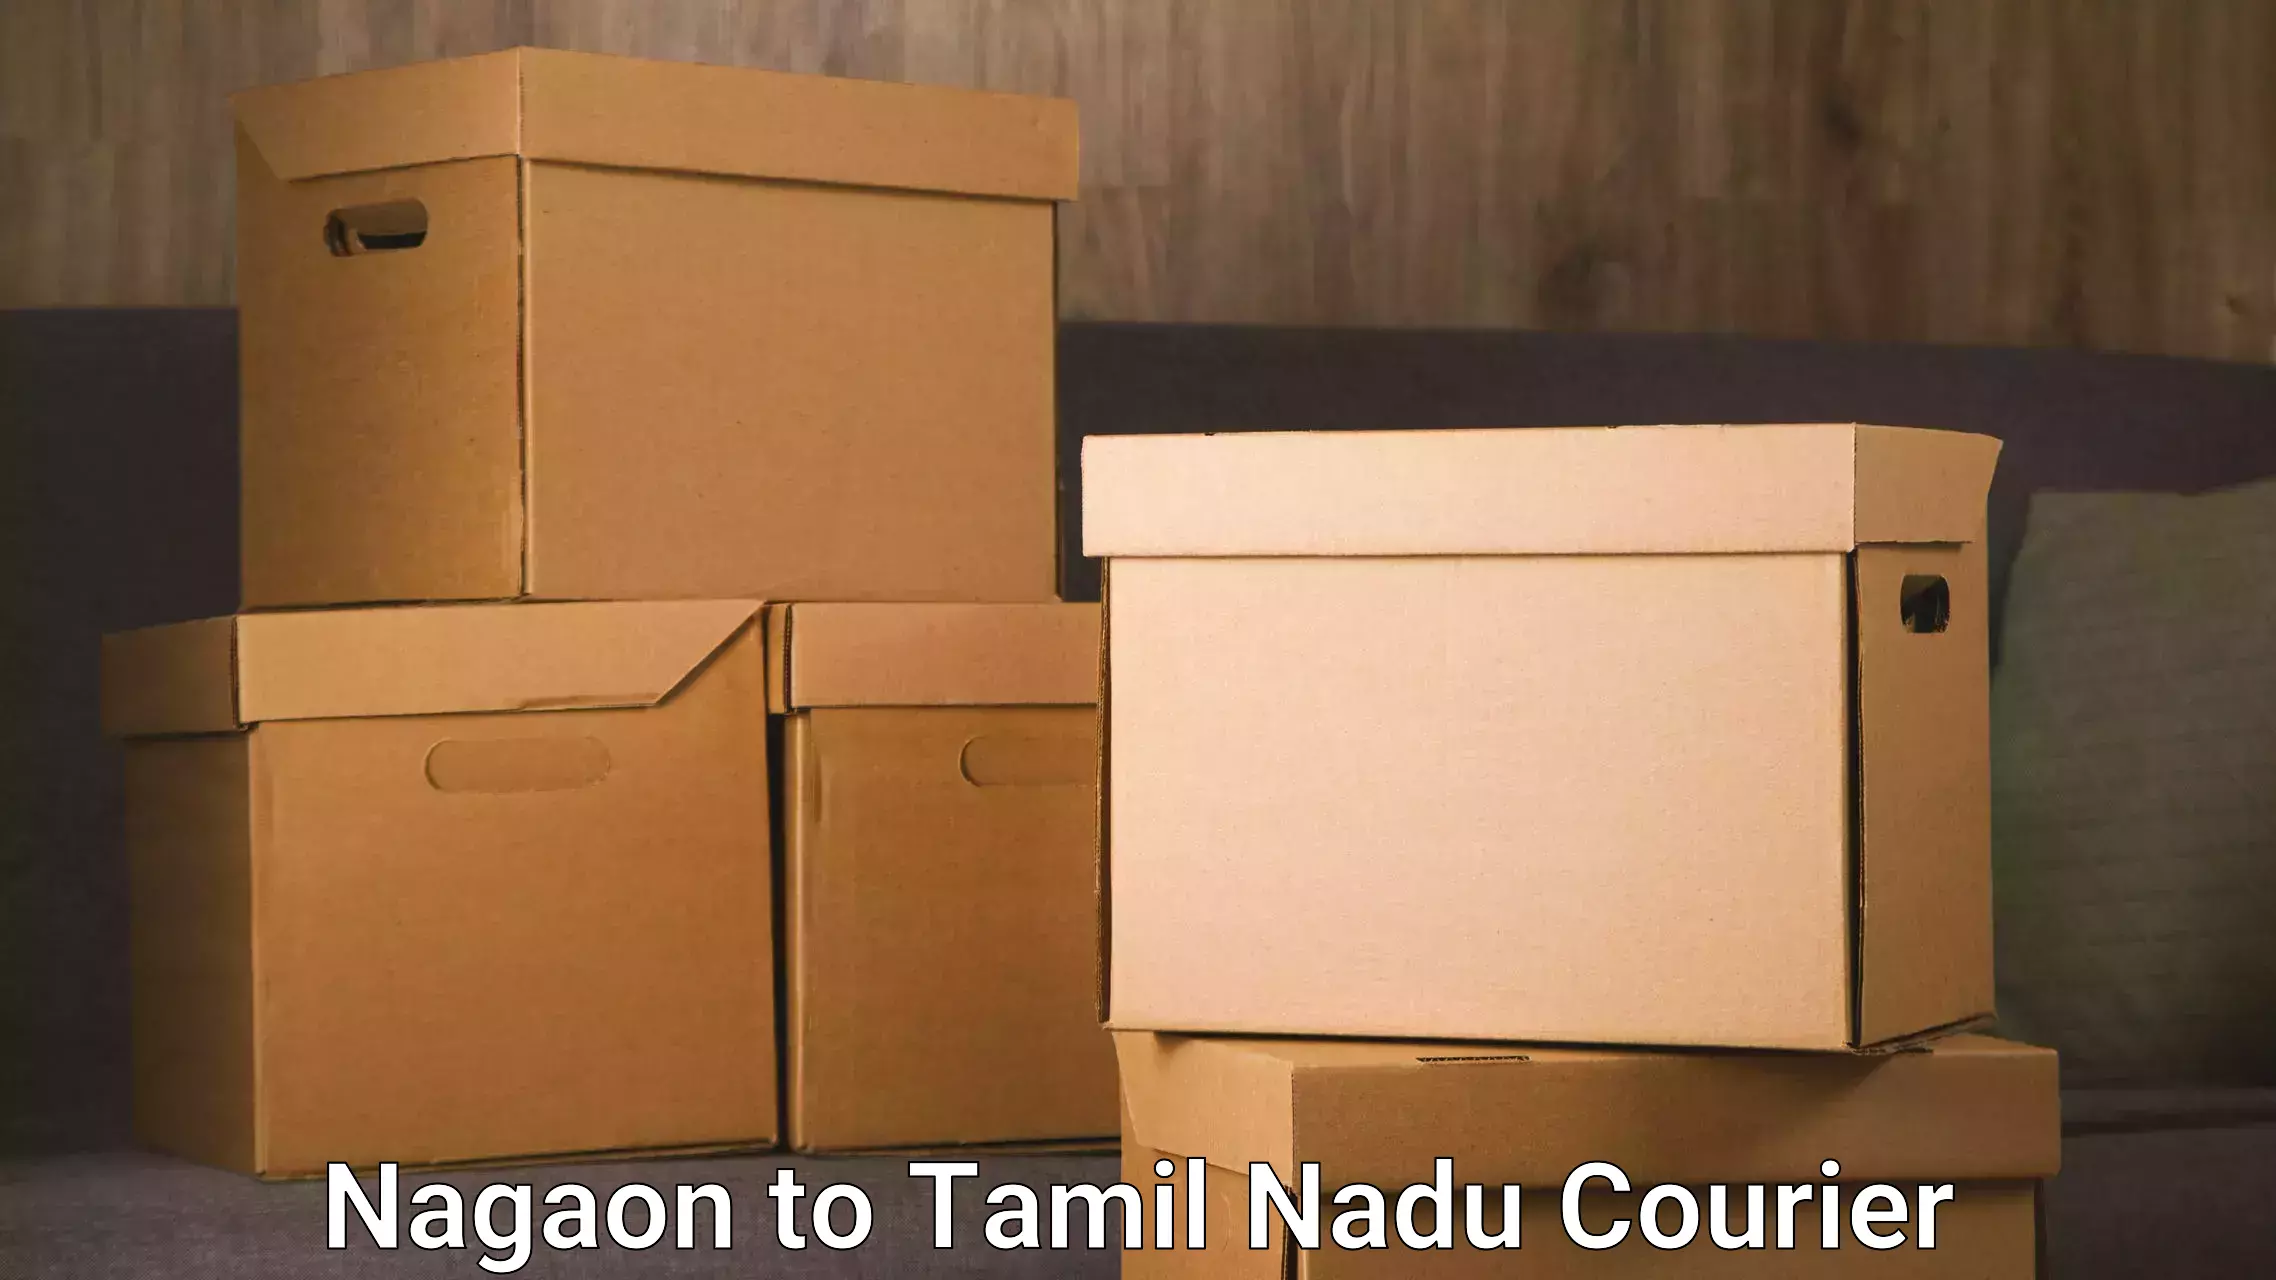 Courier service comparison Nagaon to Tamil Nadu